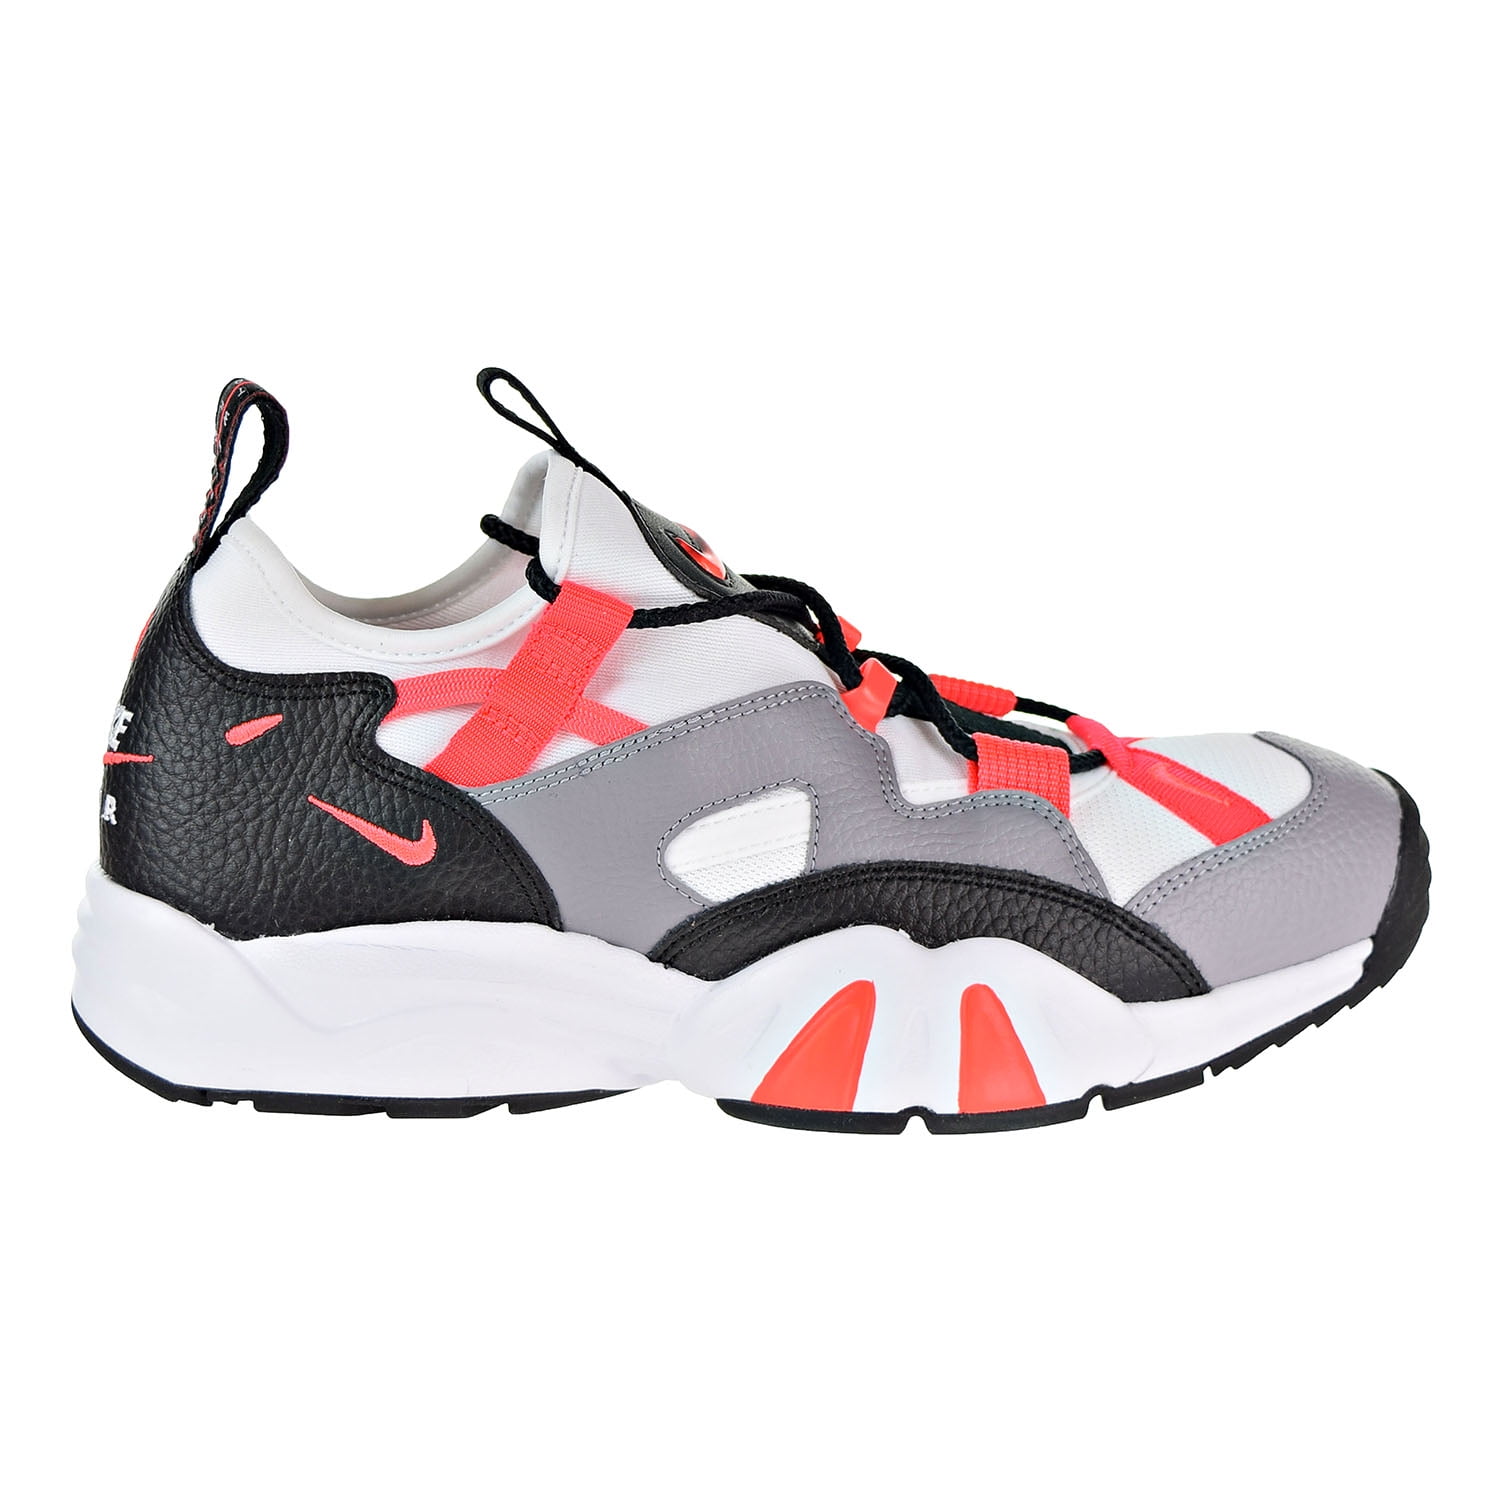 chasquido Activamente Confusión Nike Air Scream LWP Men's Shoes Cement Grey/Infrared/Black ah8517-002 -  Walmart.com